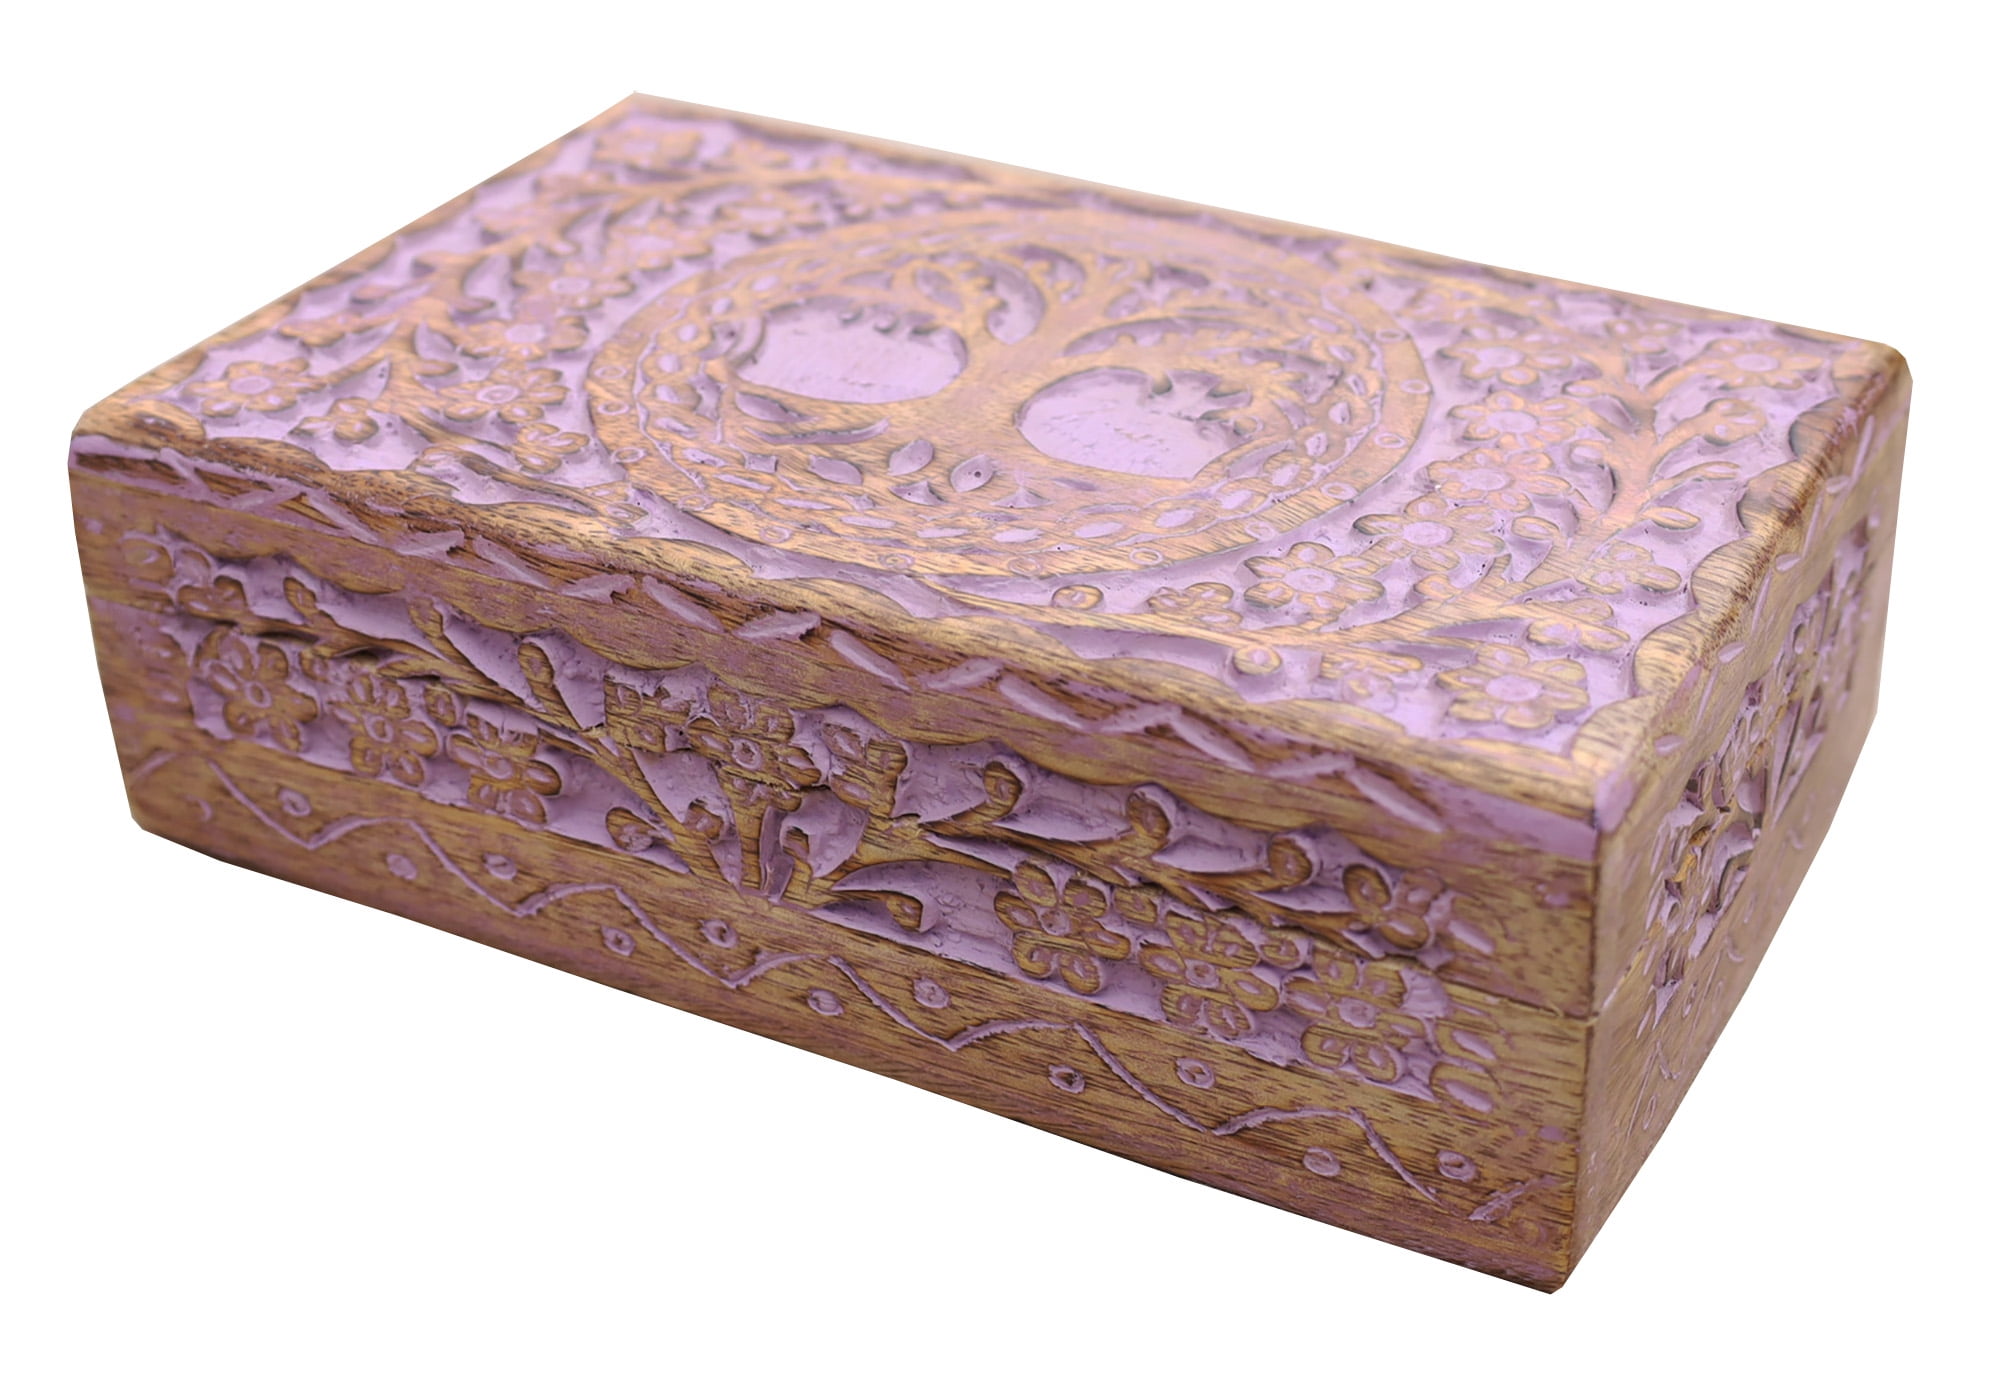 Vintage plastic oval jewelry red box-Trinket box-Storage box-Organizer-Transparent cover floral pattern-Keepsake box-Memory box-Valuables